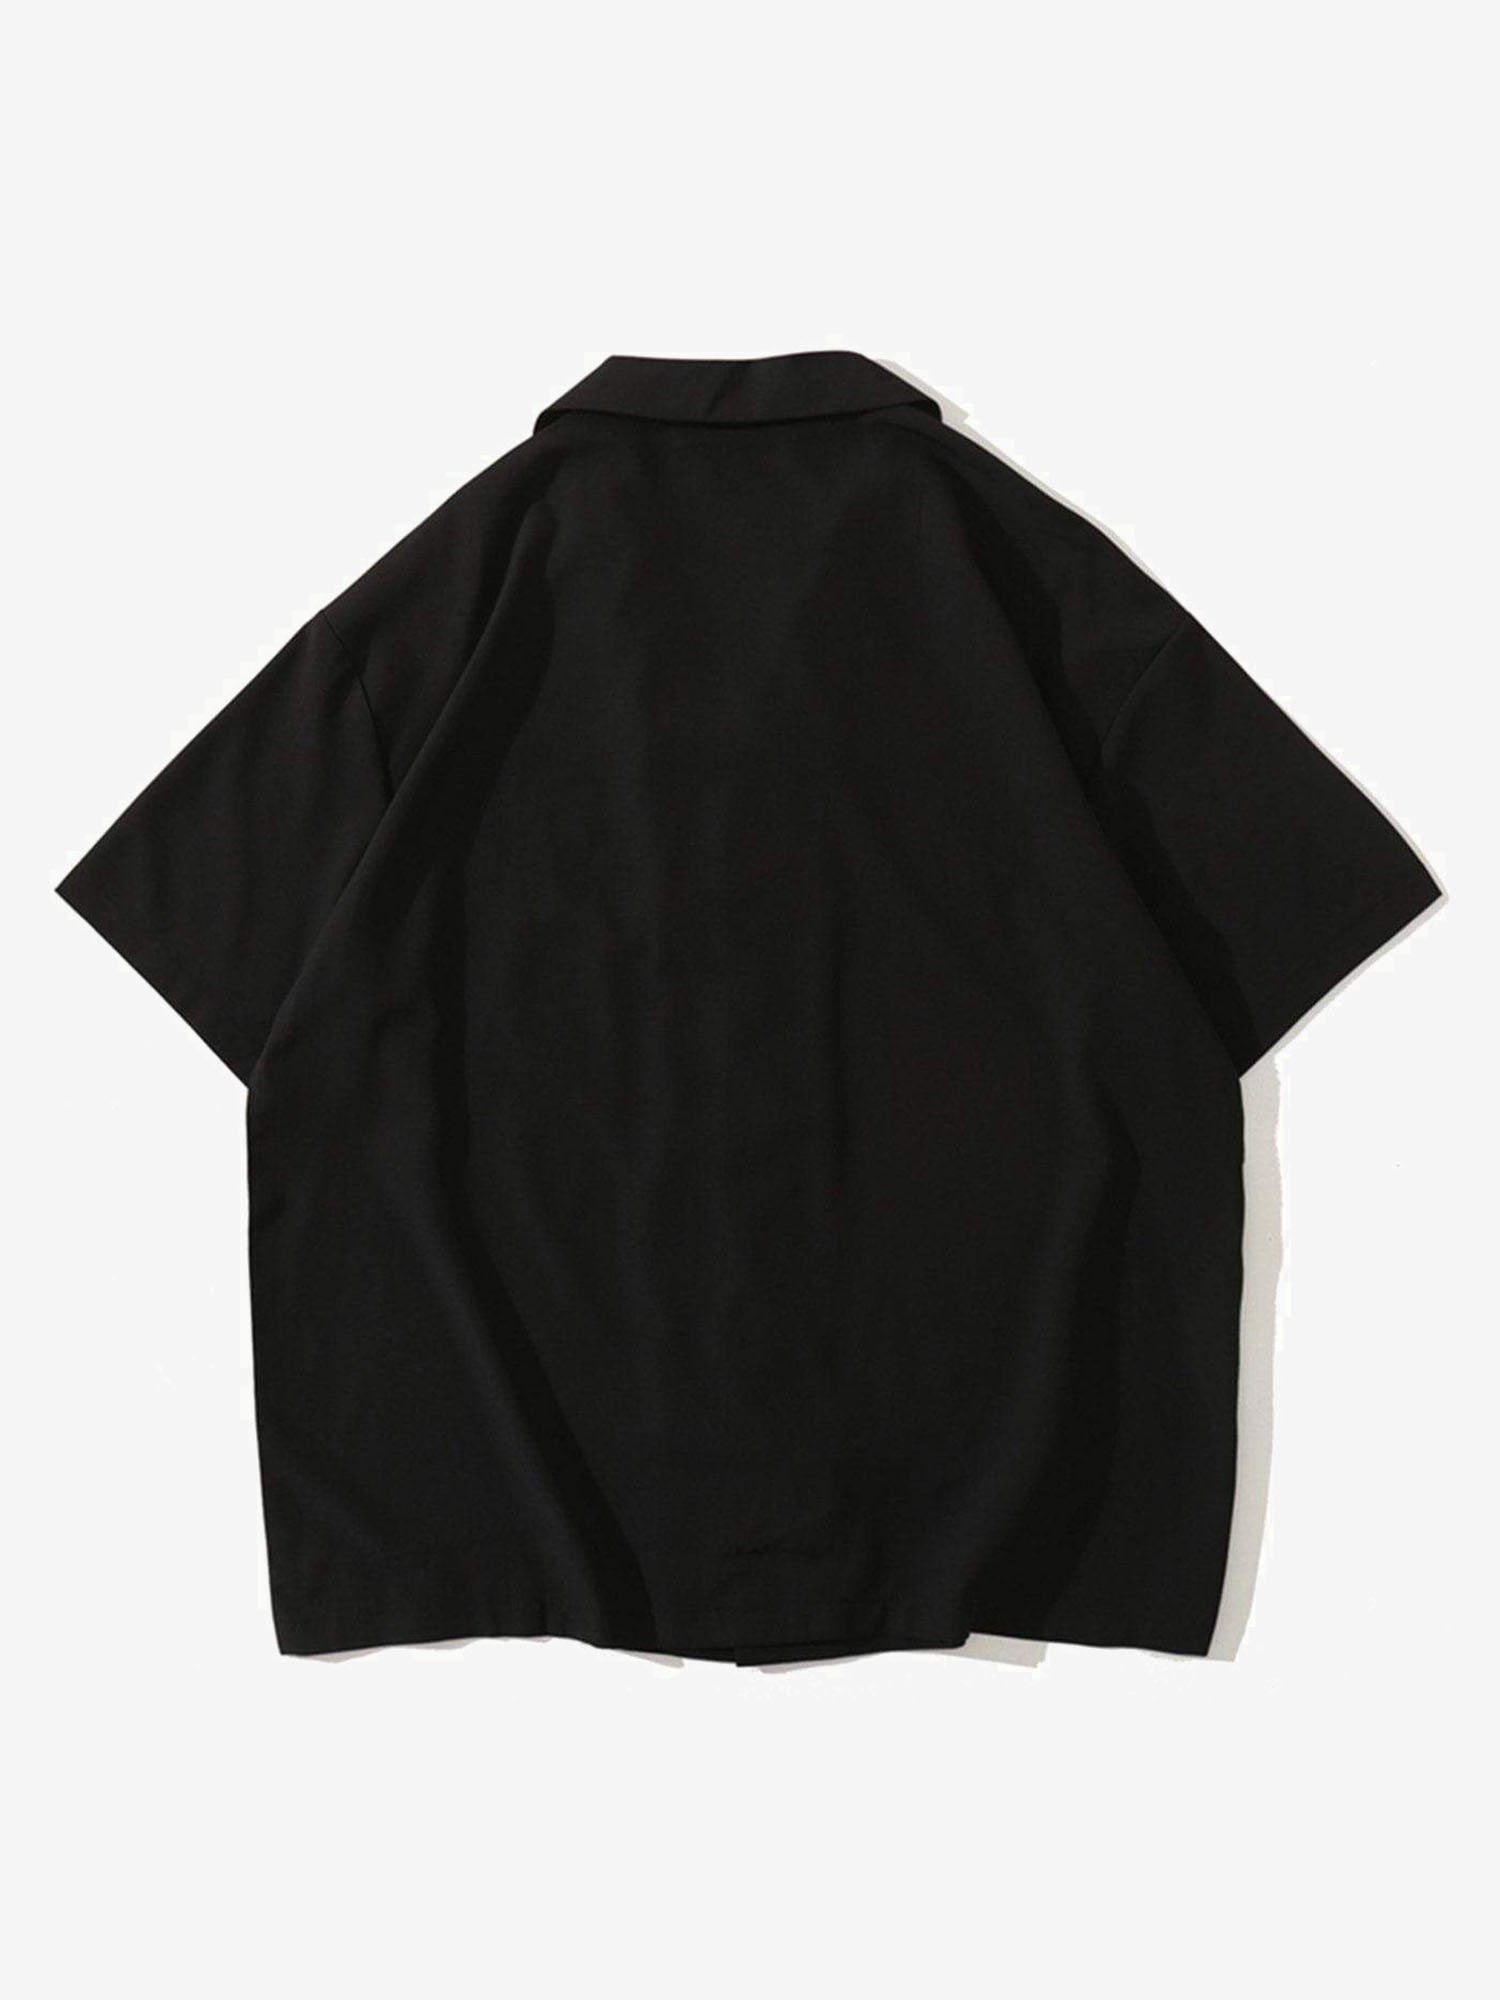 JUSTNOTAG Bandana Paisley Letters Embroidered Short Sleeve Shirt